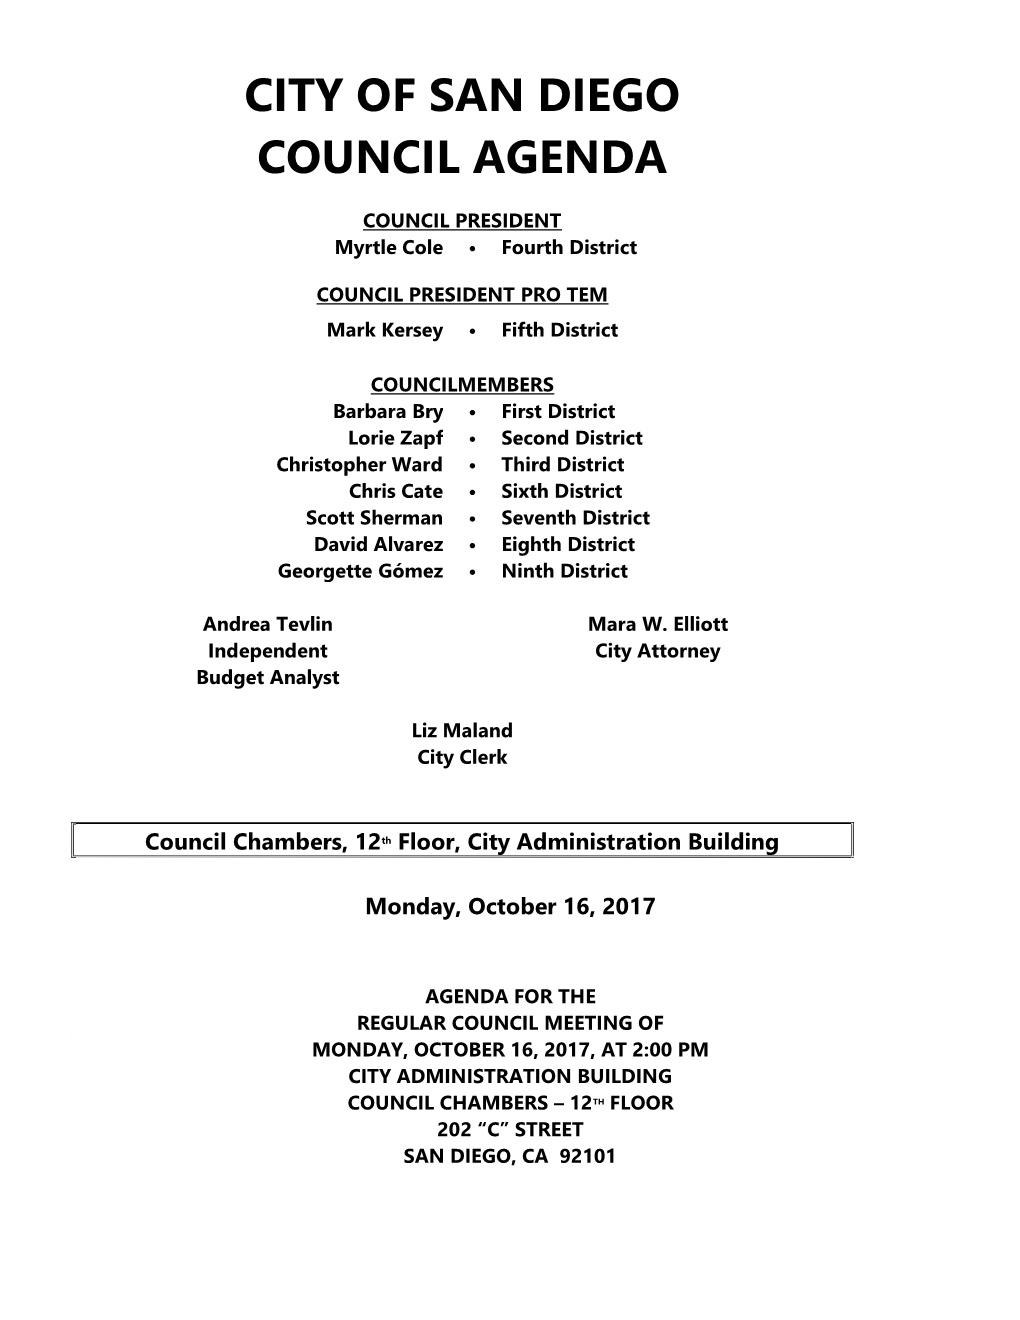 City of San Diego Council Agenda